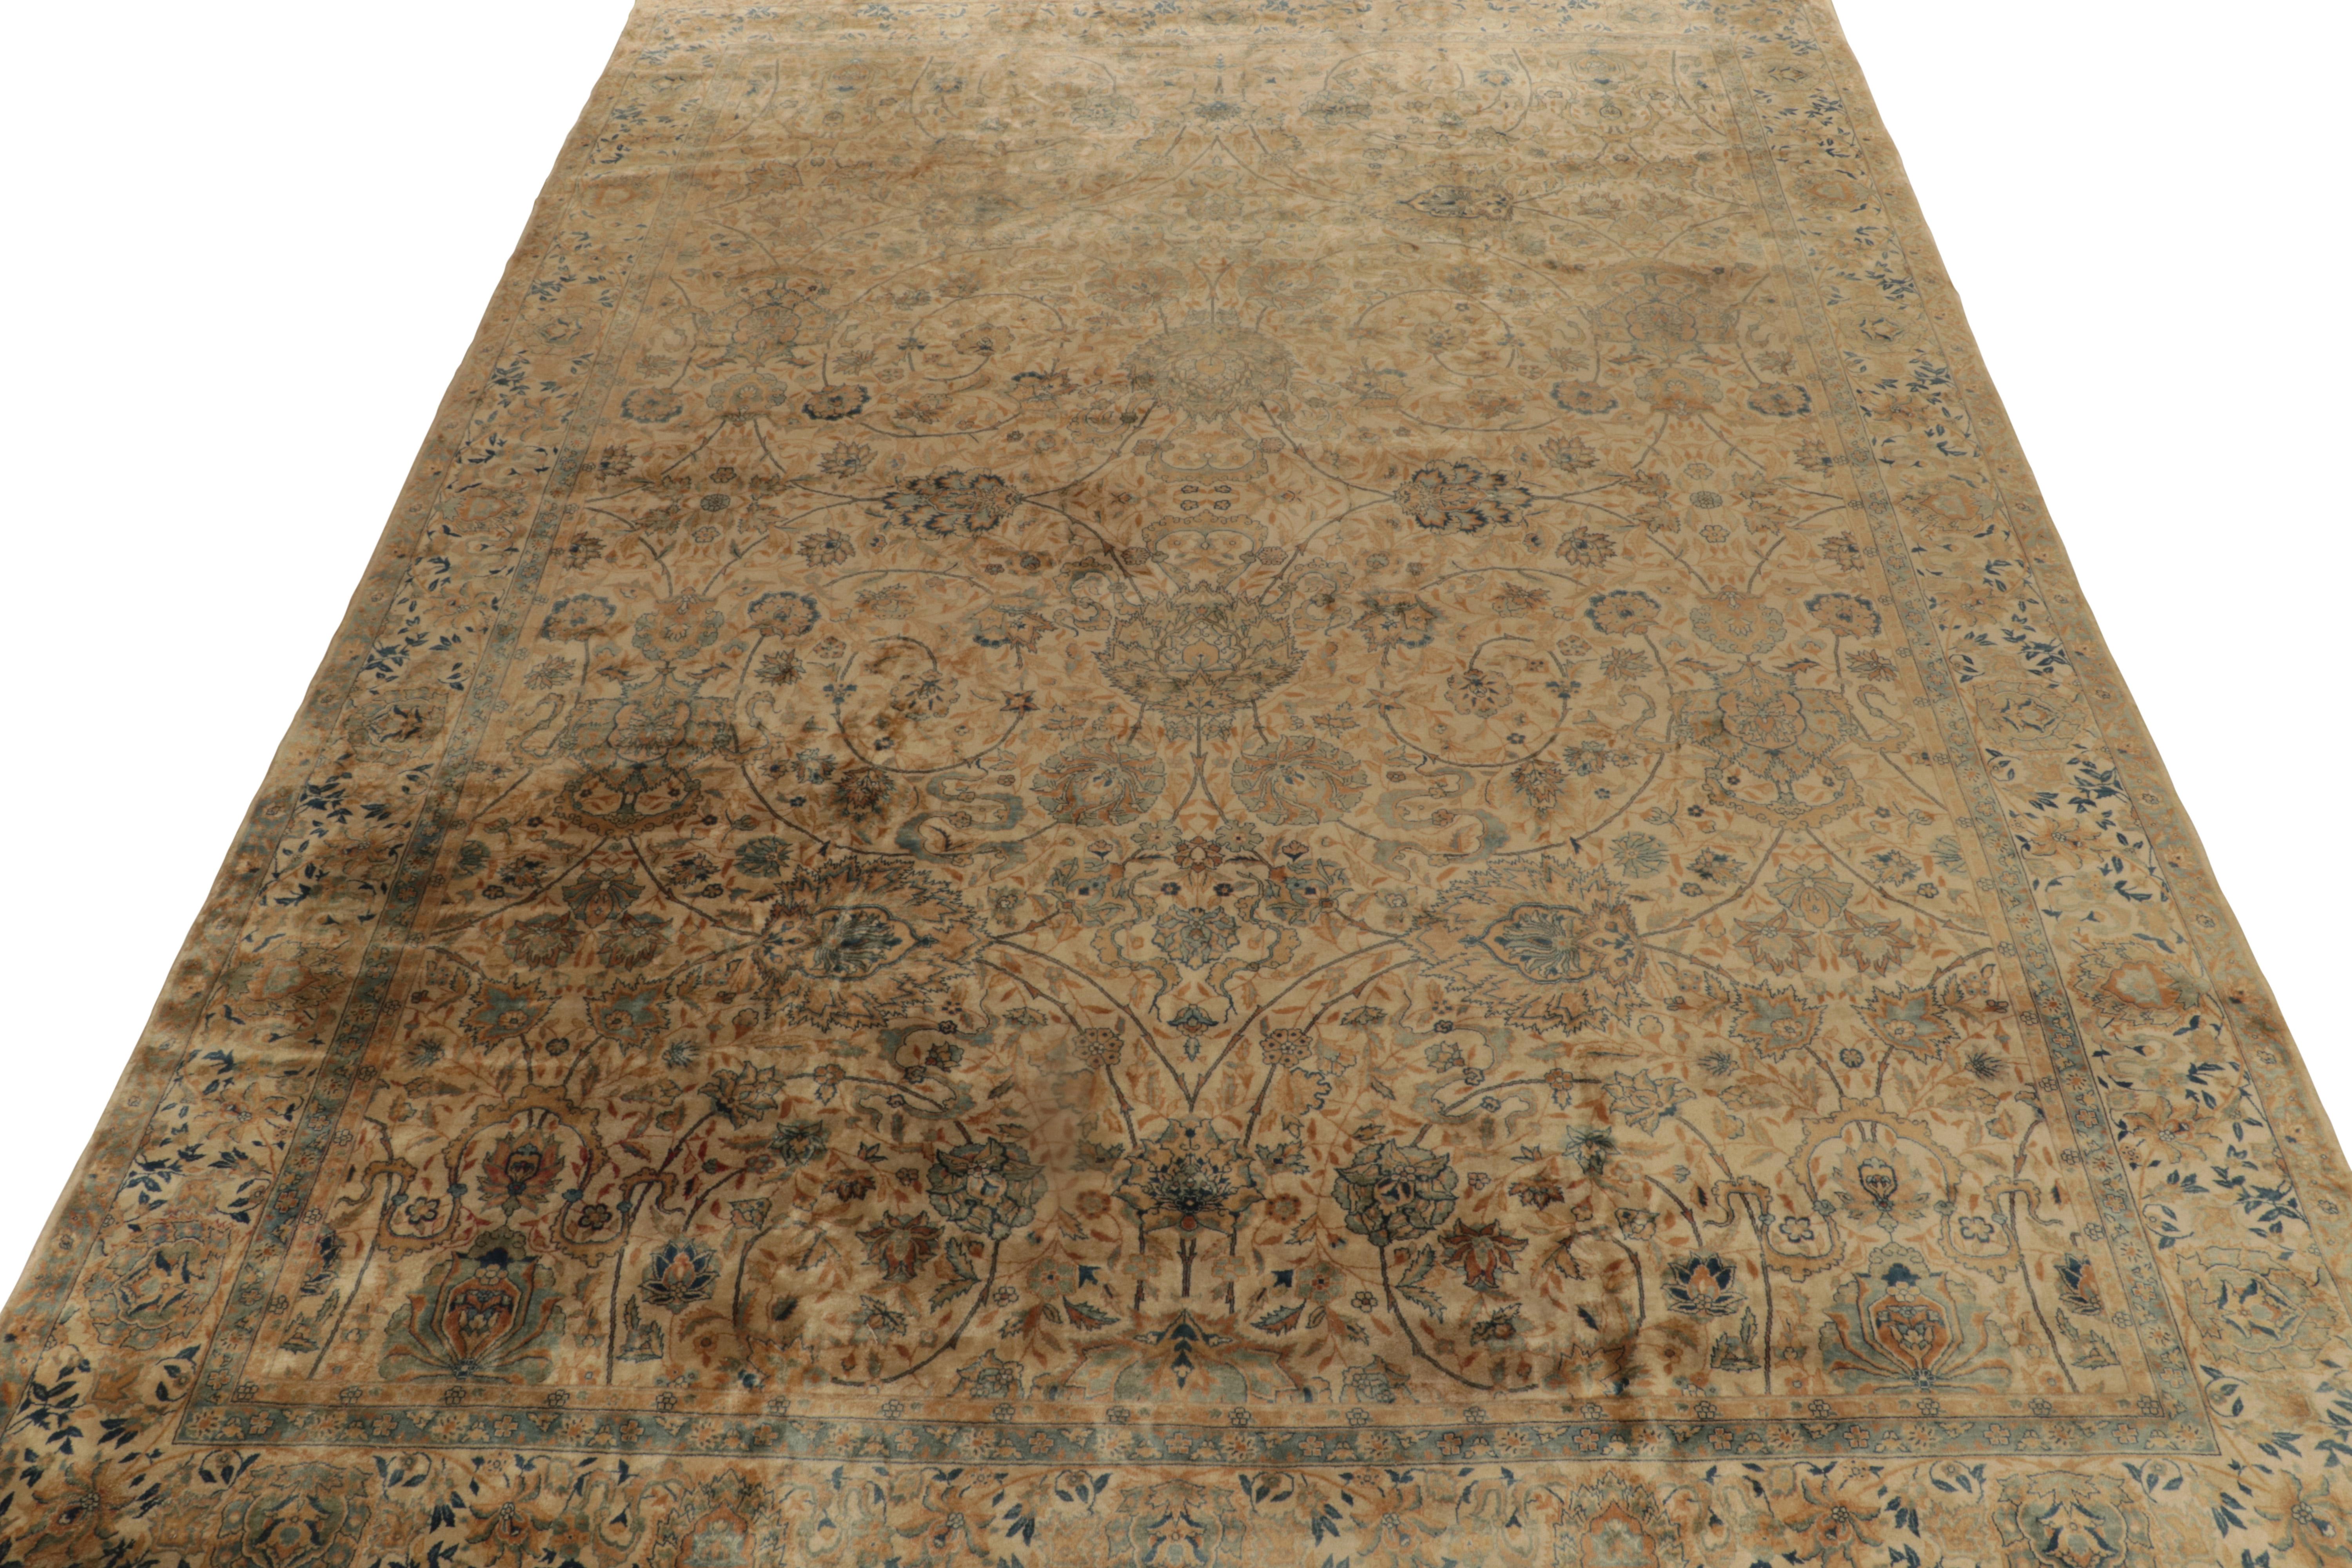 Indian Antique Kashan style rug in Beige-Brown, Gold Blue Floral Pattern by Rug & Kilim For Sale